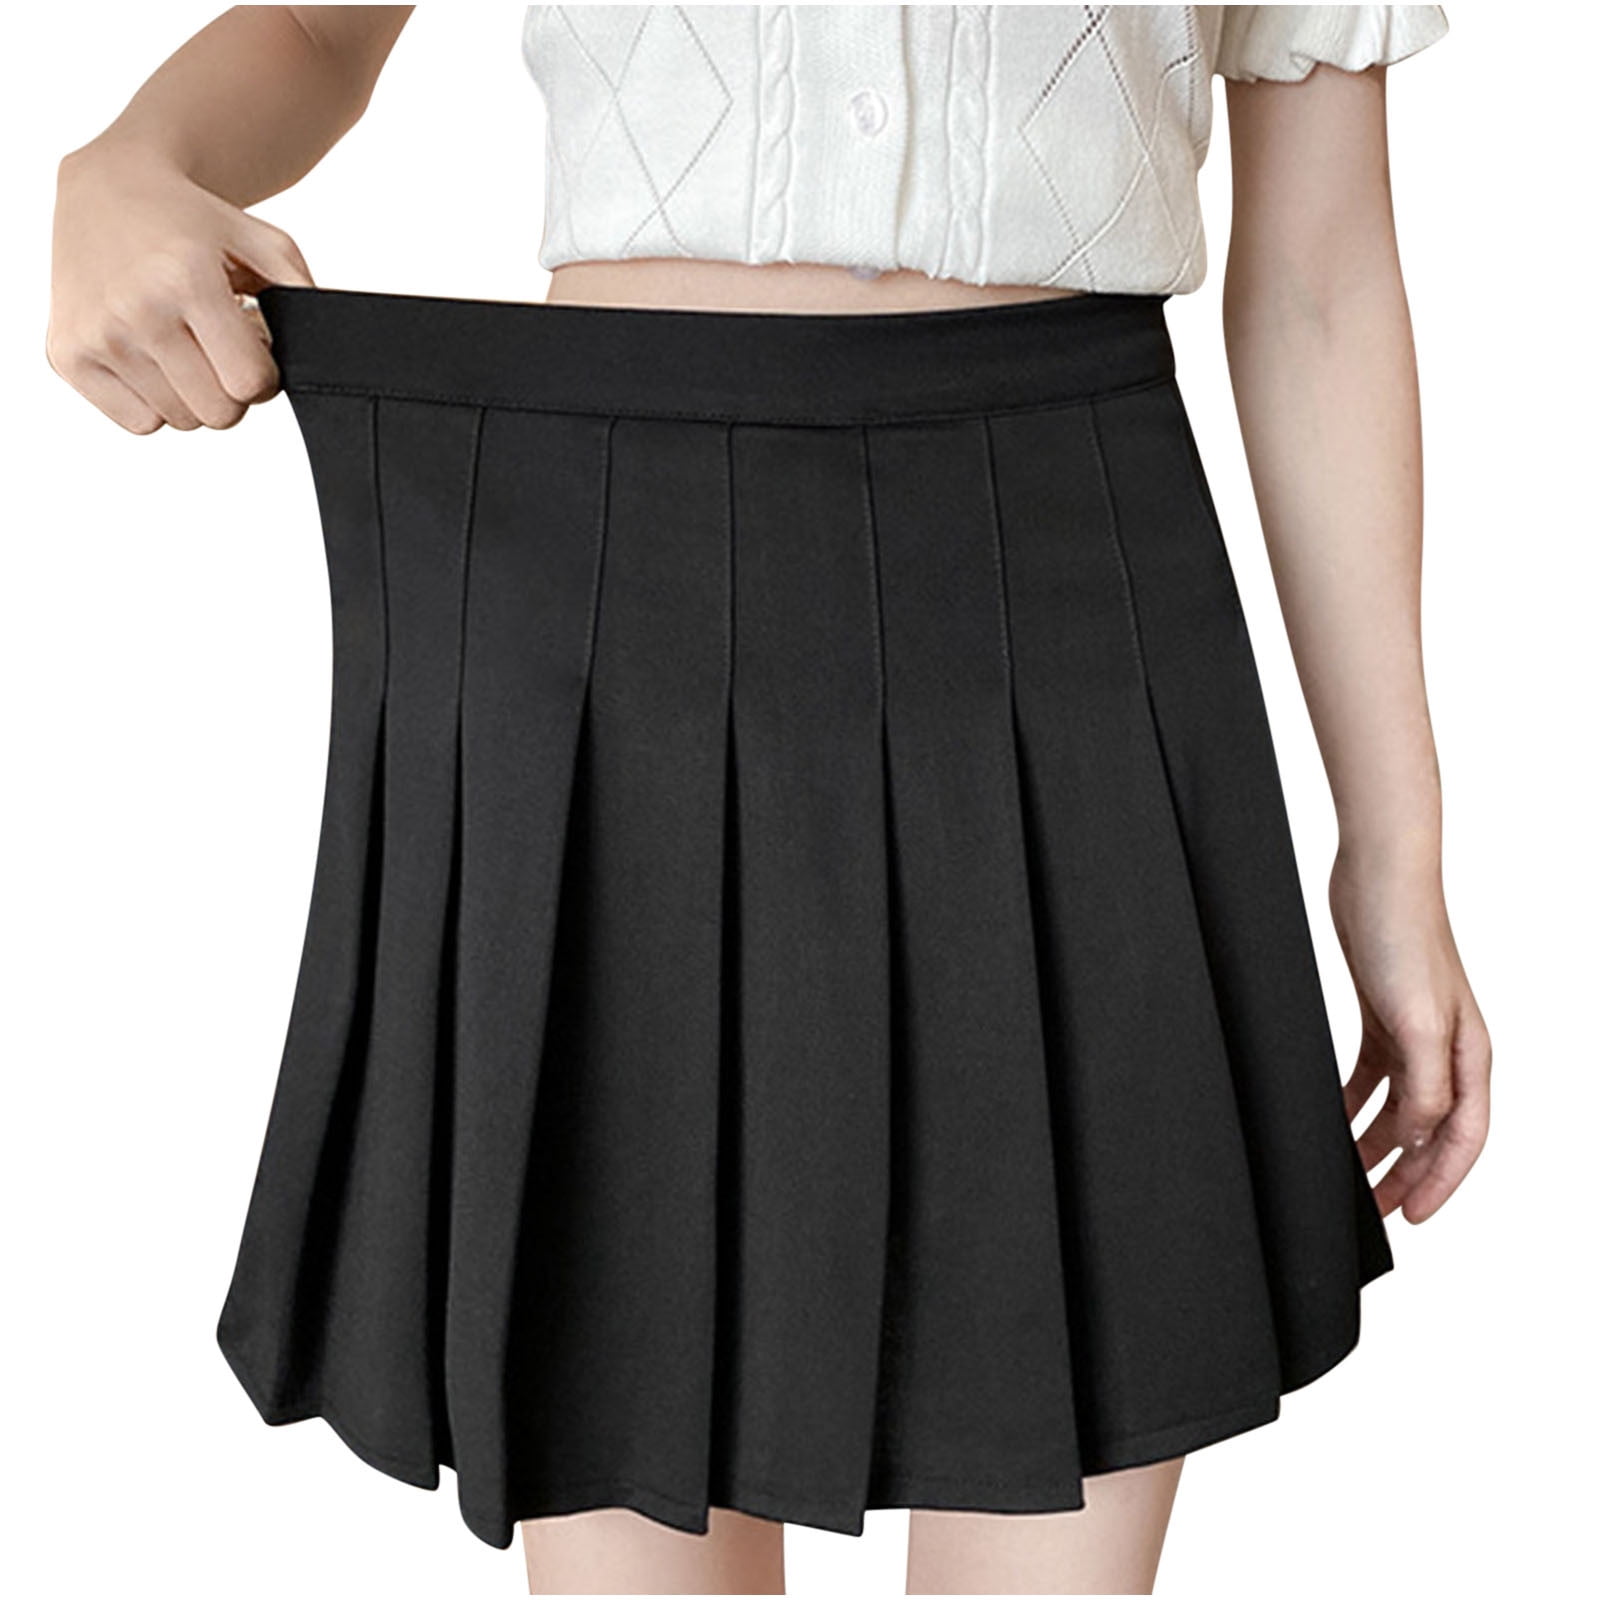 Mrat Tennis Skirts Women Short Skirt Fashion Ladies Pleated A-Line Skirt  Anti-Burnout Solid High Waist Short Skirt Satin Skirts for Femalen